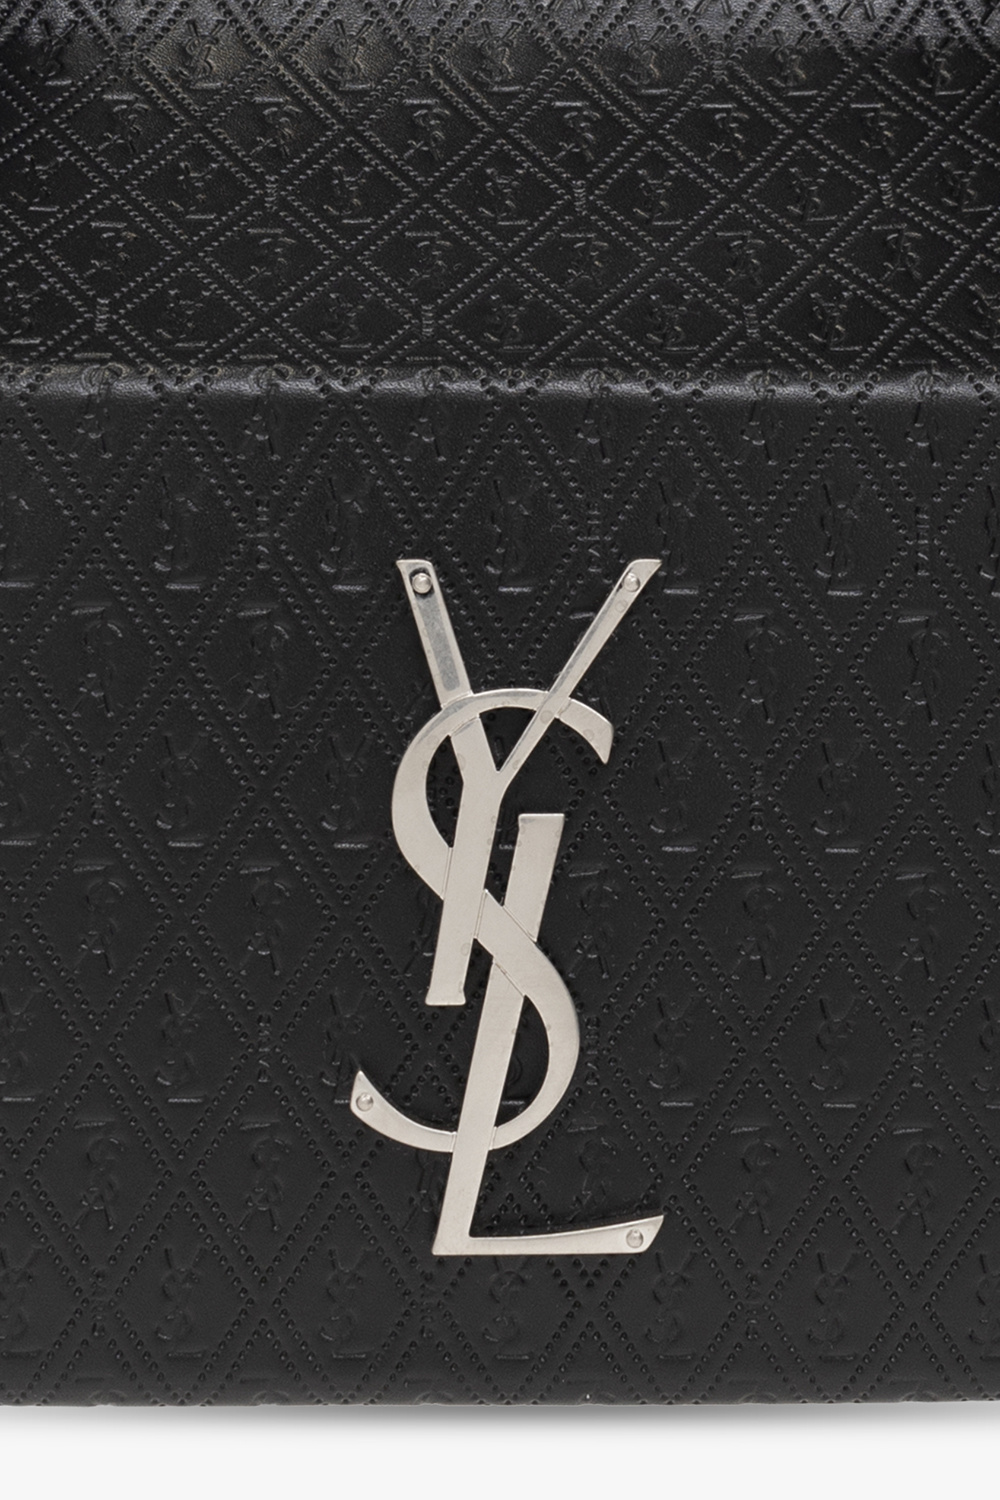 Louis Vuitton Hat Box 30 - Vitkac shop online